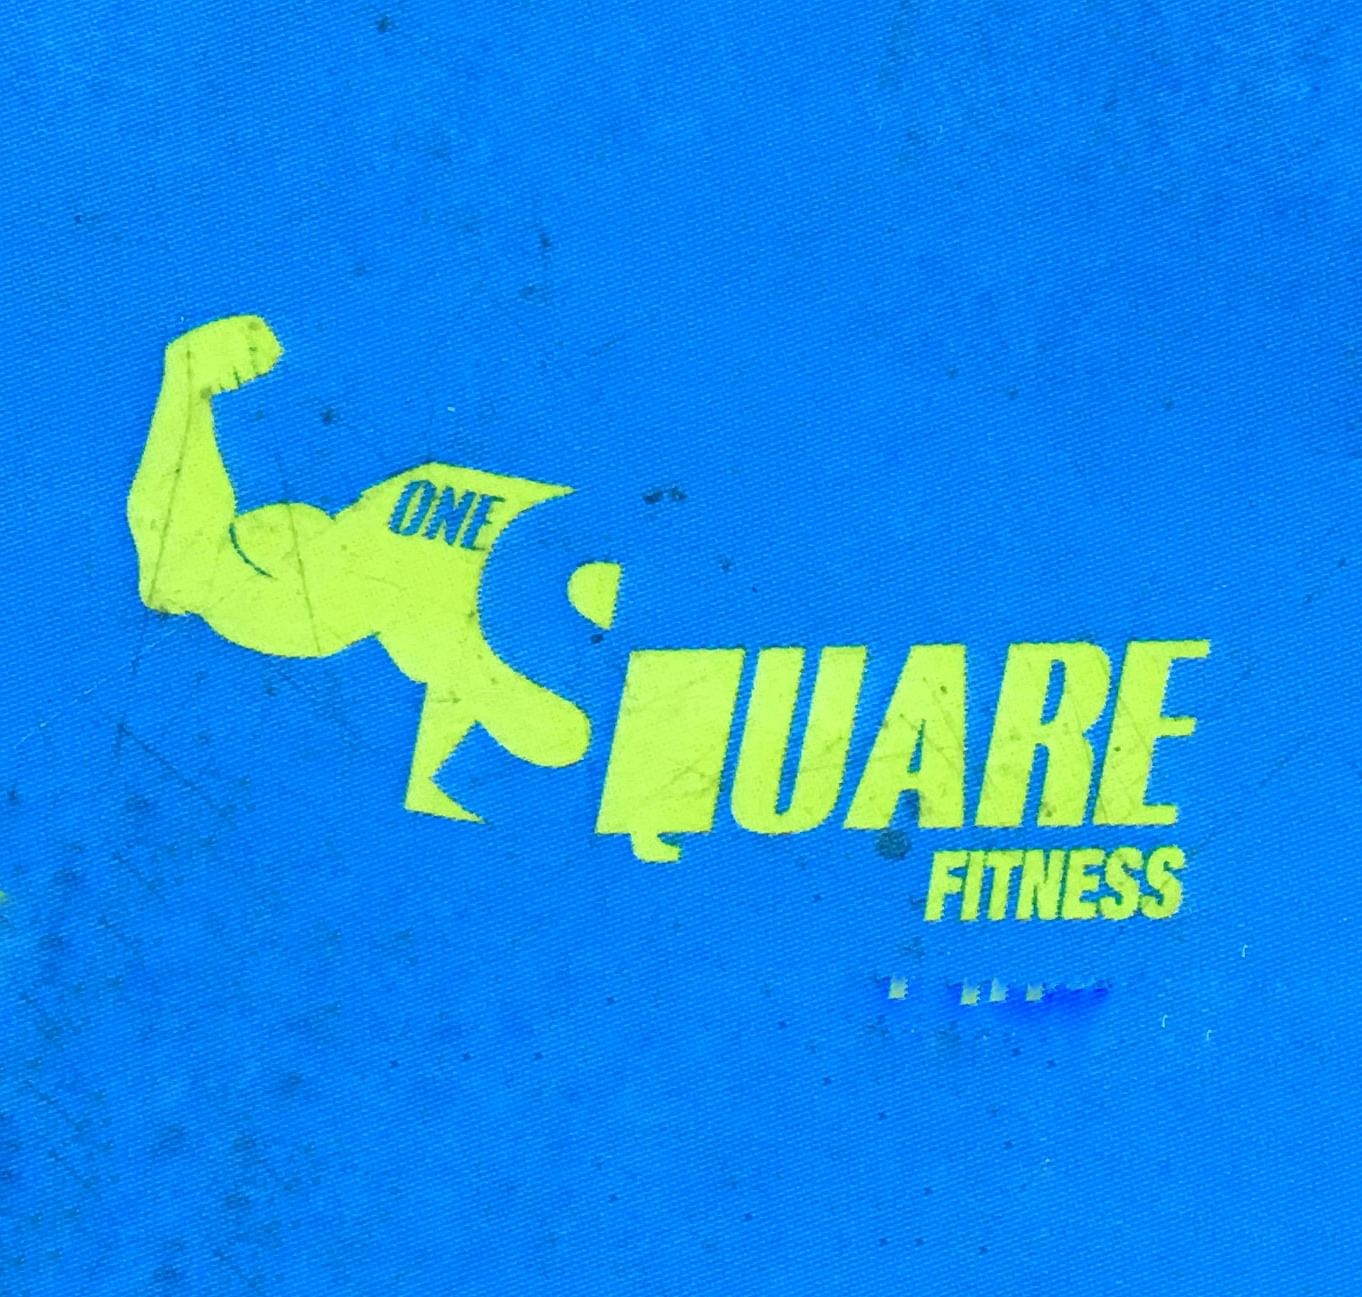 One Square Fitness Nagarbhavi